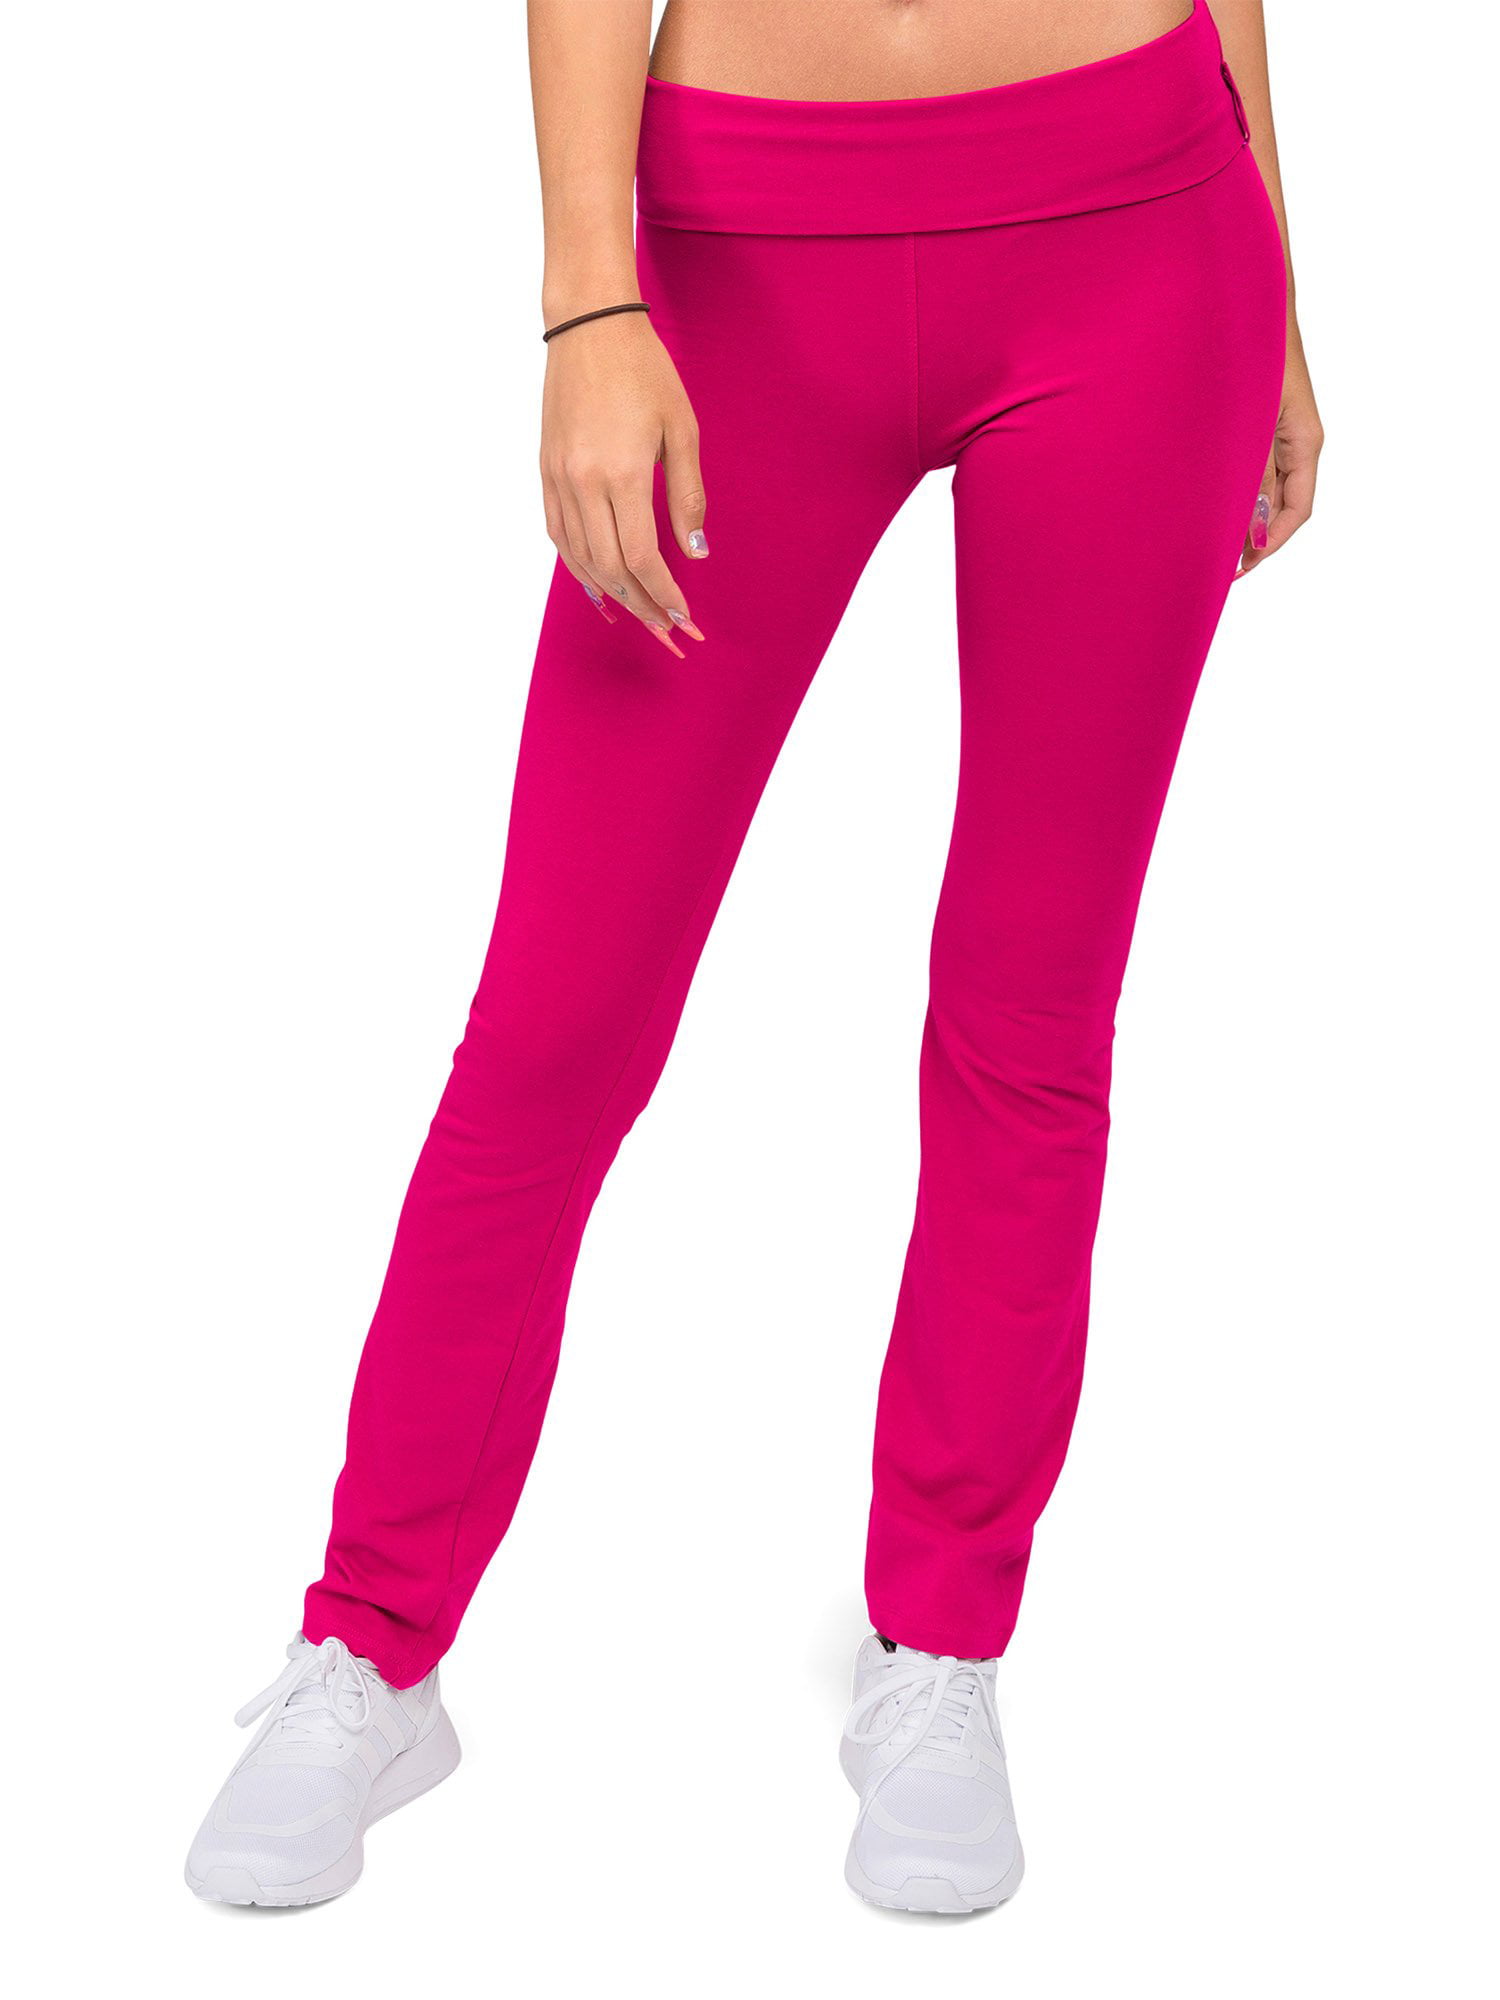 G-Style USA Women's Bootcut Flare Leggings Yoga Pants 8150 - Hot Pink -  Small 